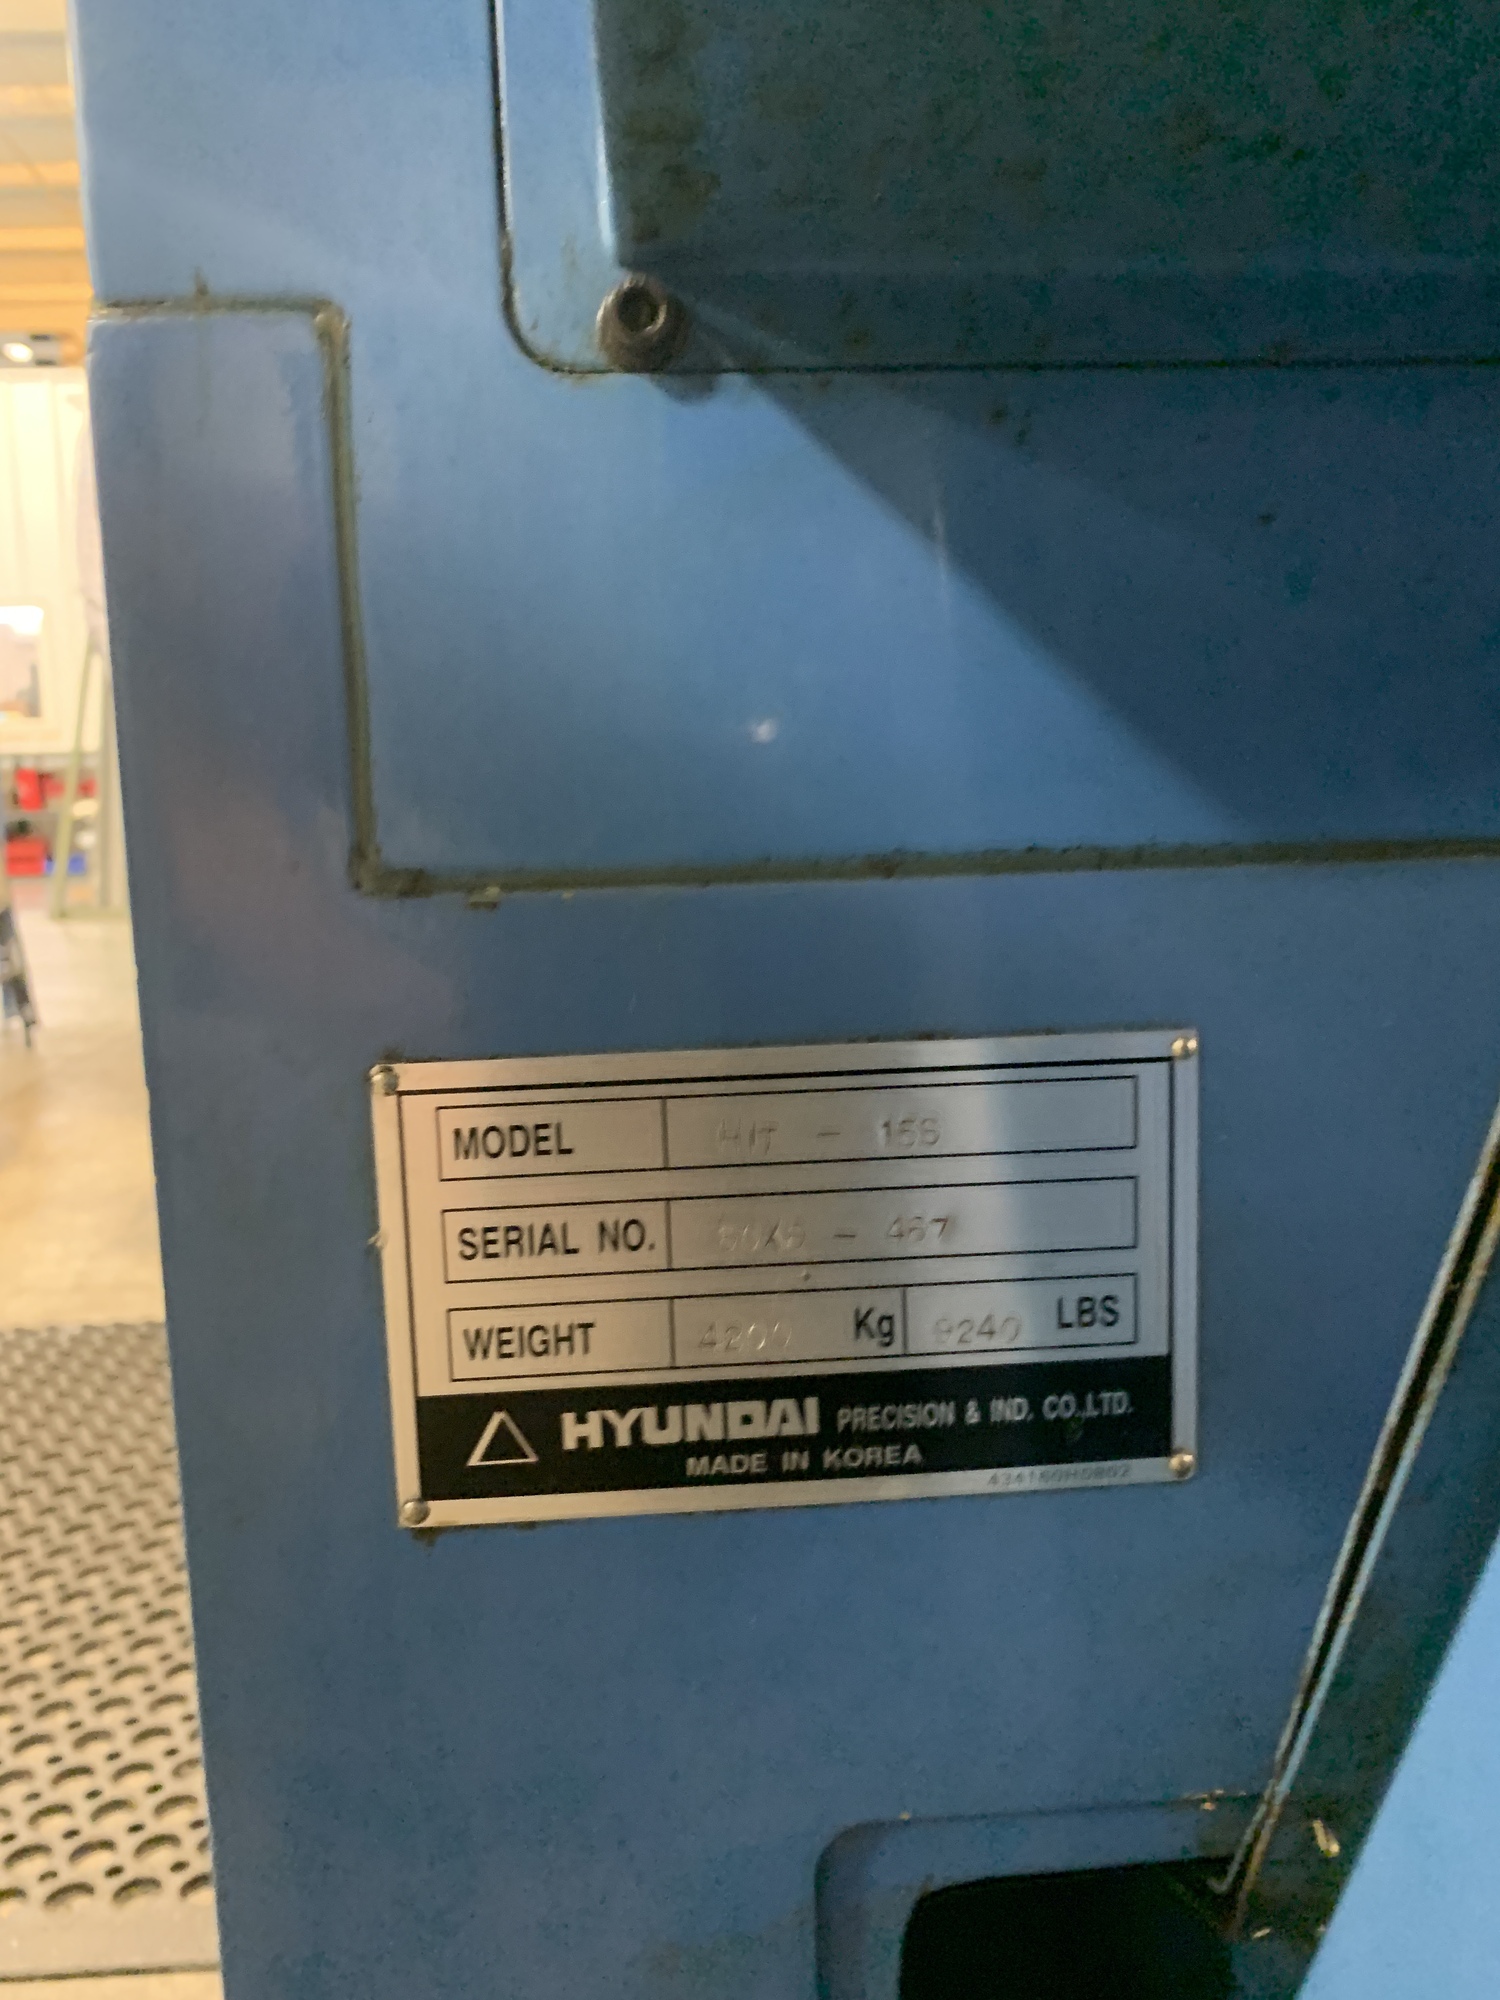 HYUNDAI HiT-15S CNC Lathes | RELCO MACHINERY